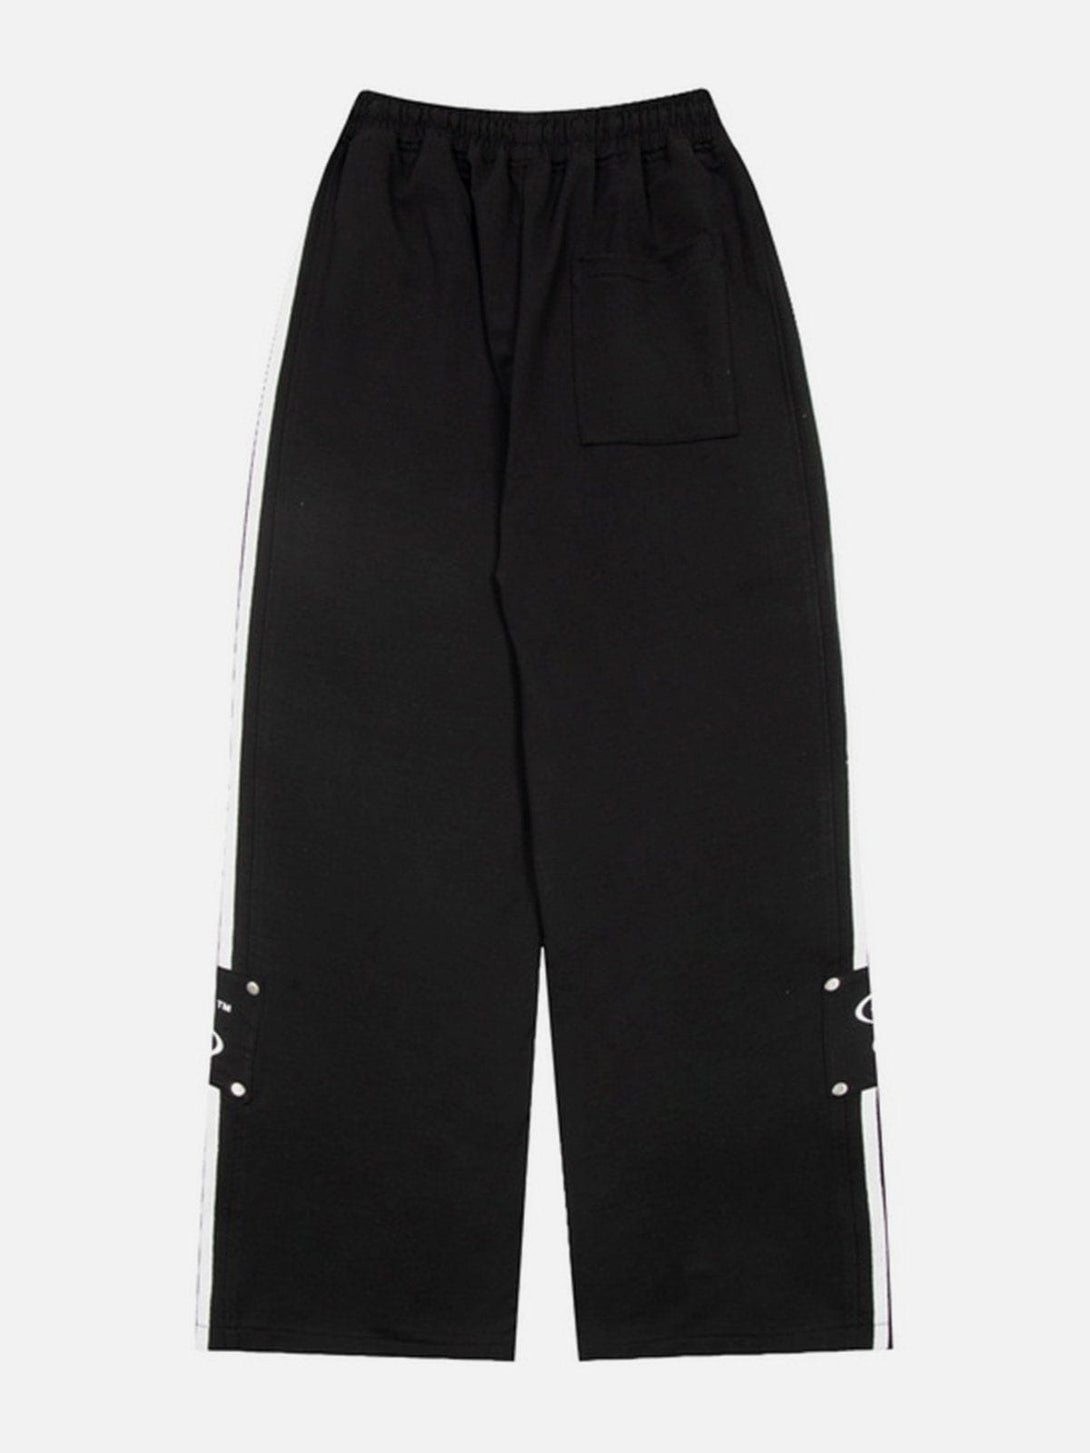 Levefly - Striped Drawstring Sweatpants - Streetwear Fashion - levefly.com